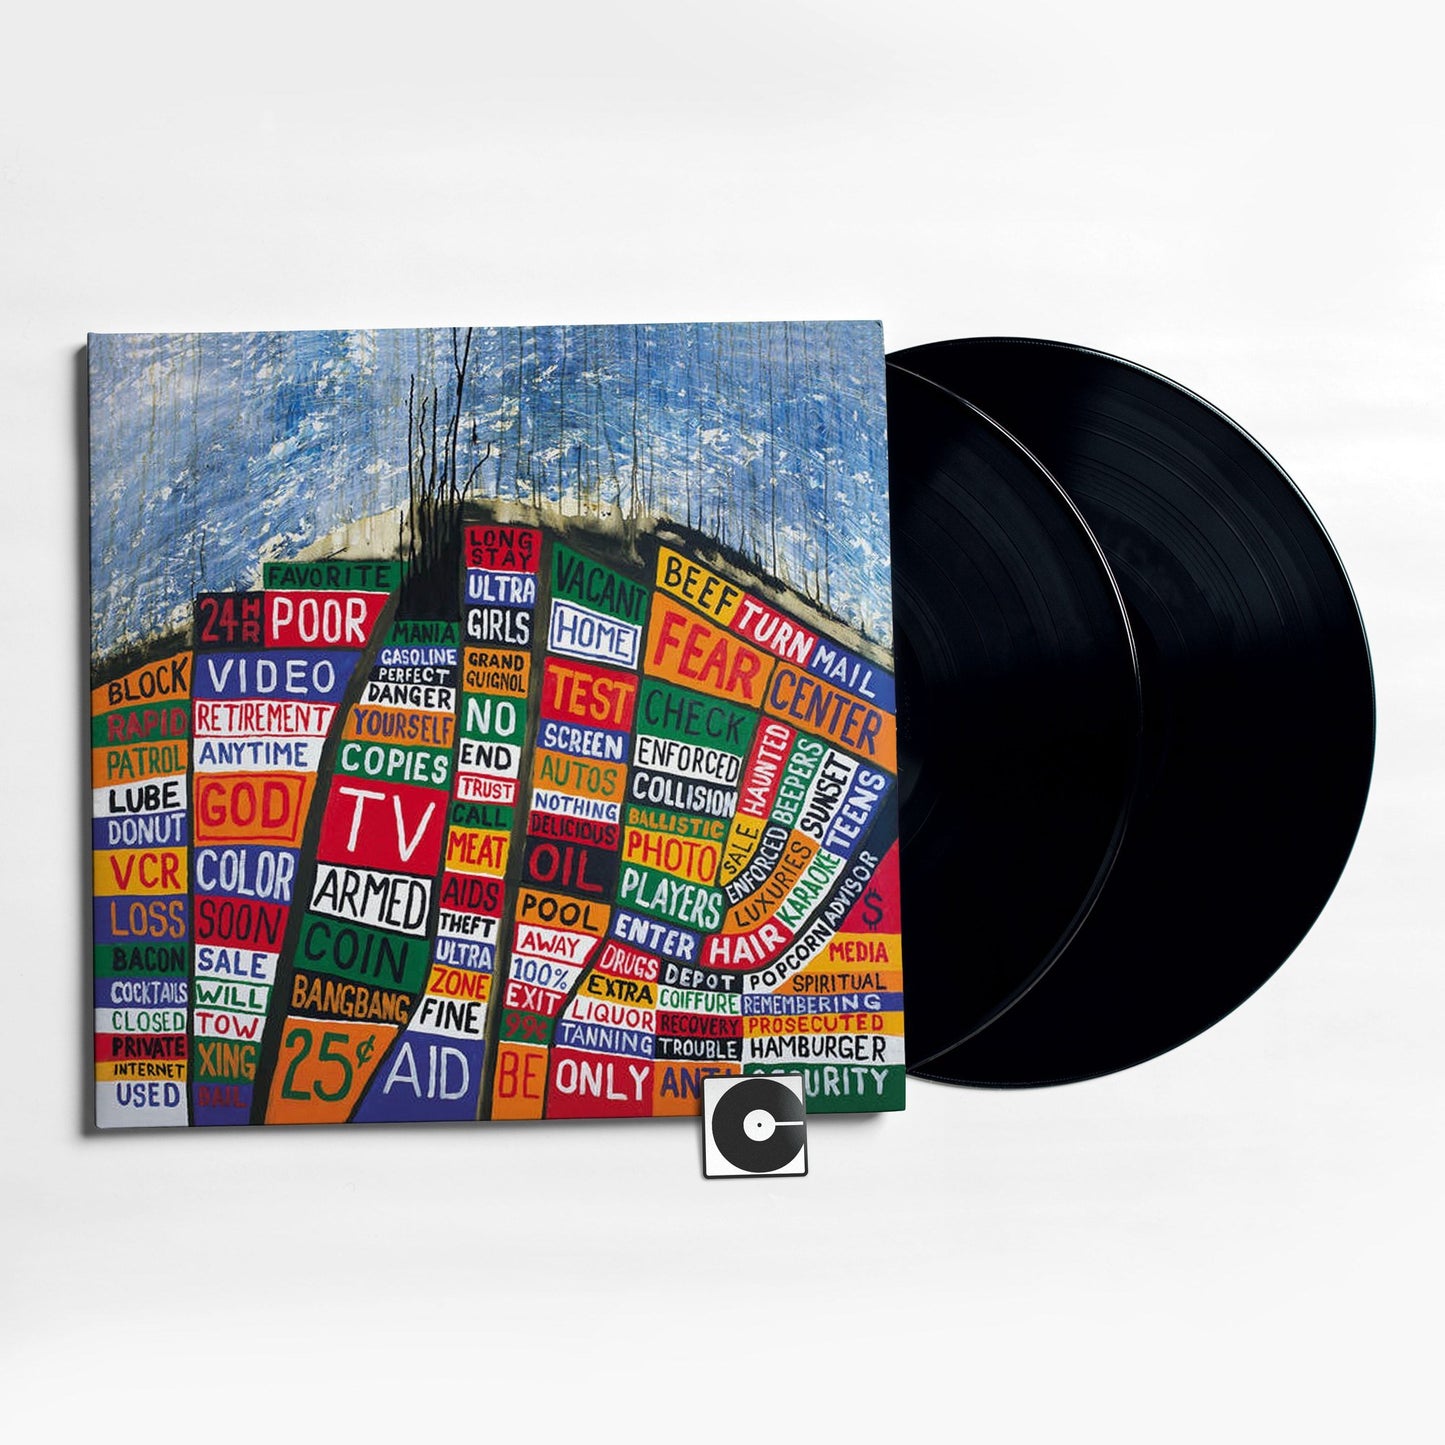 Radiohead - Hail To The Thief - Vinyl Merchandise